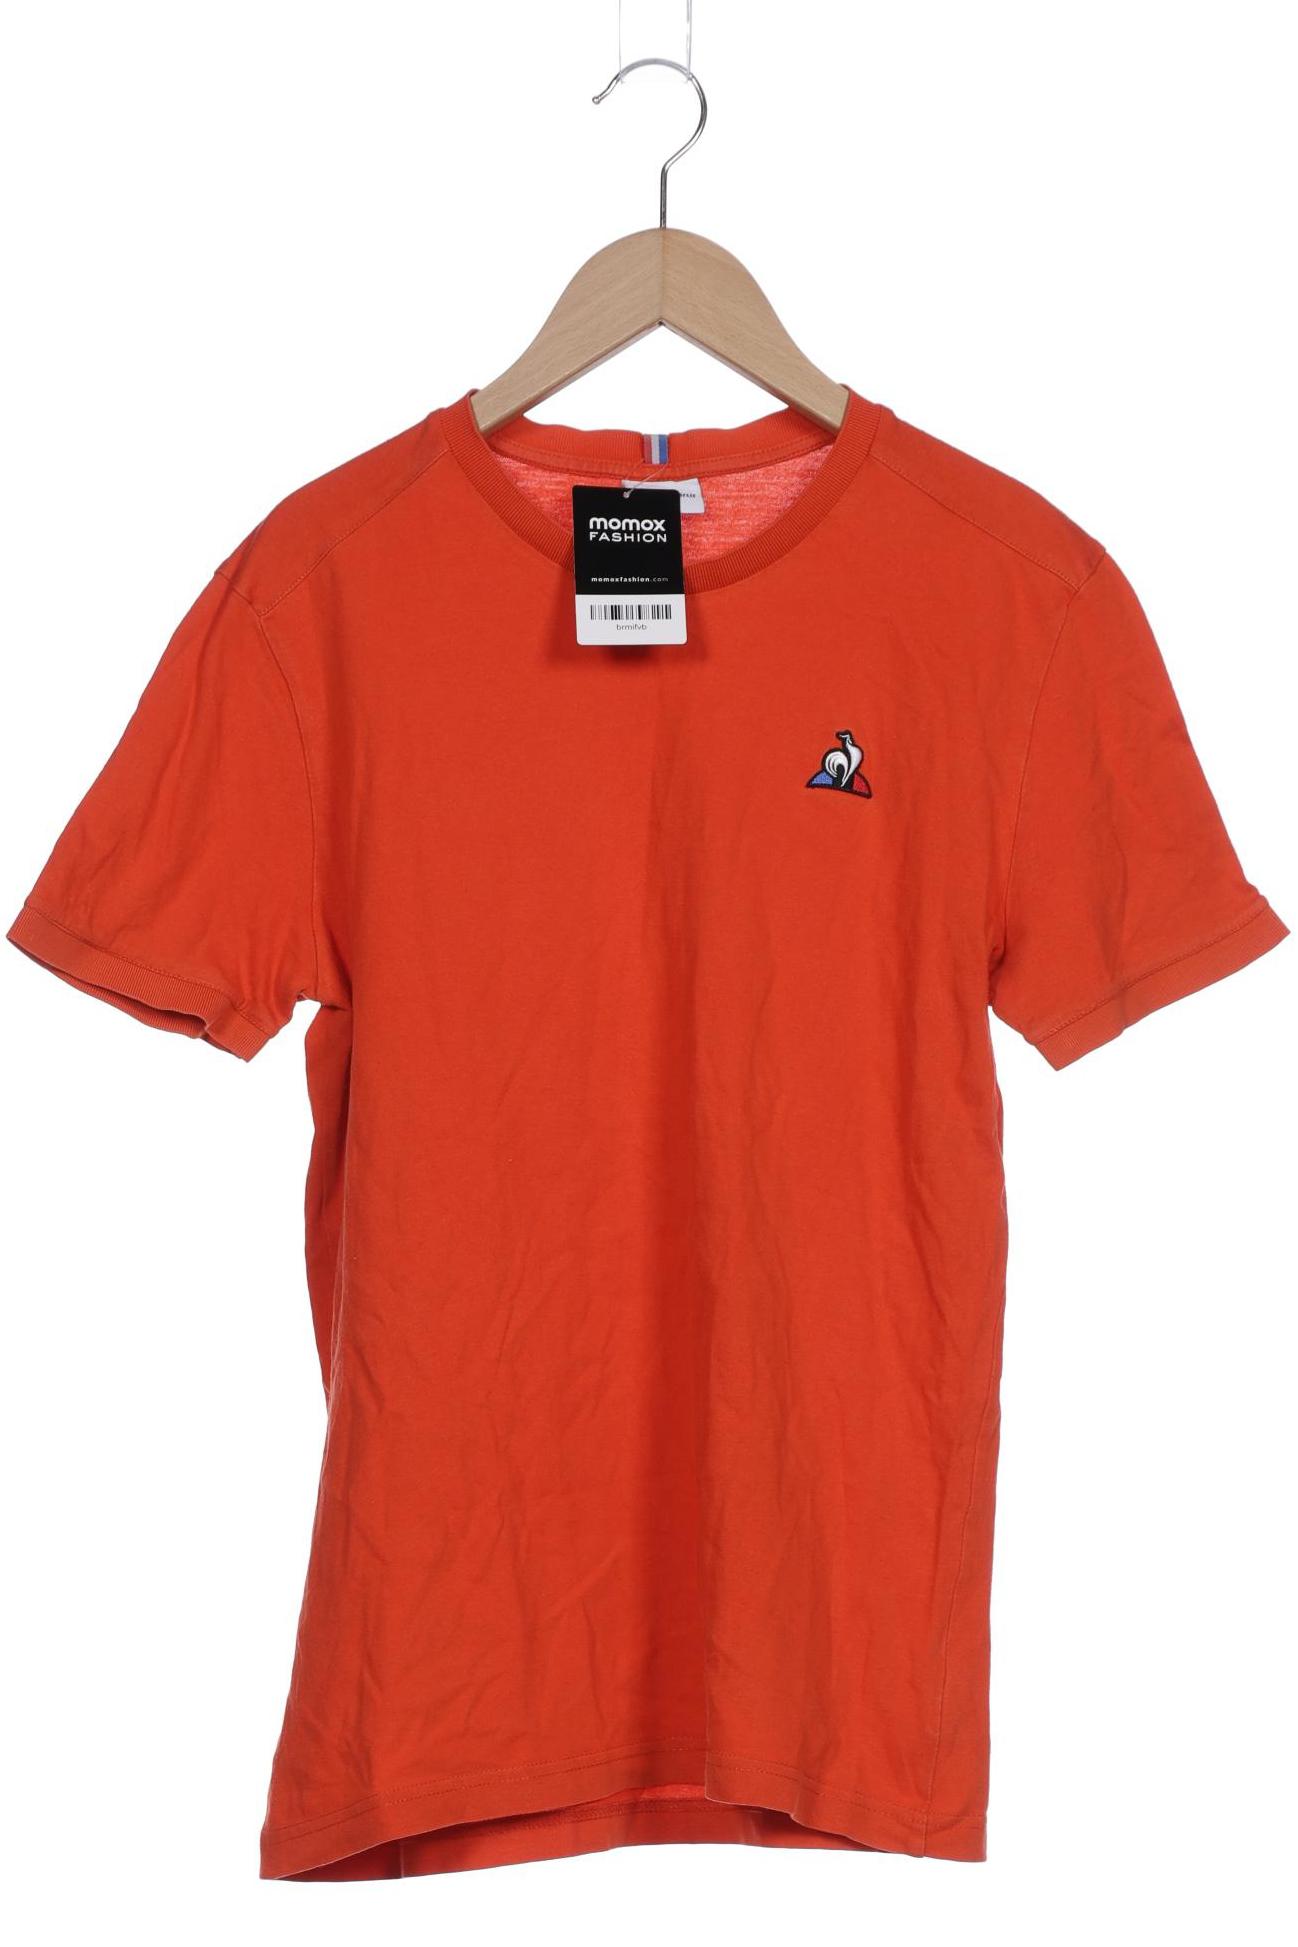 Le Coq Sportif Herren T-Shirt, orange von Le Coq Sportif